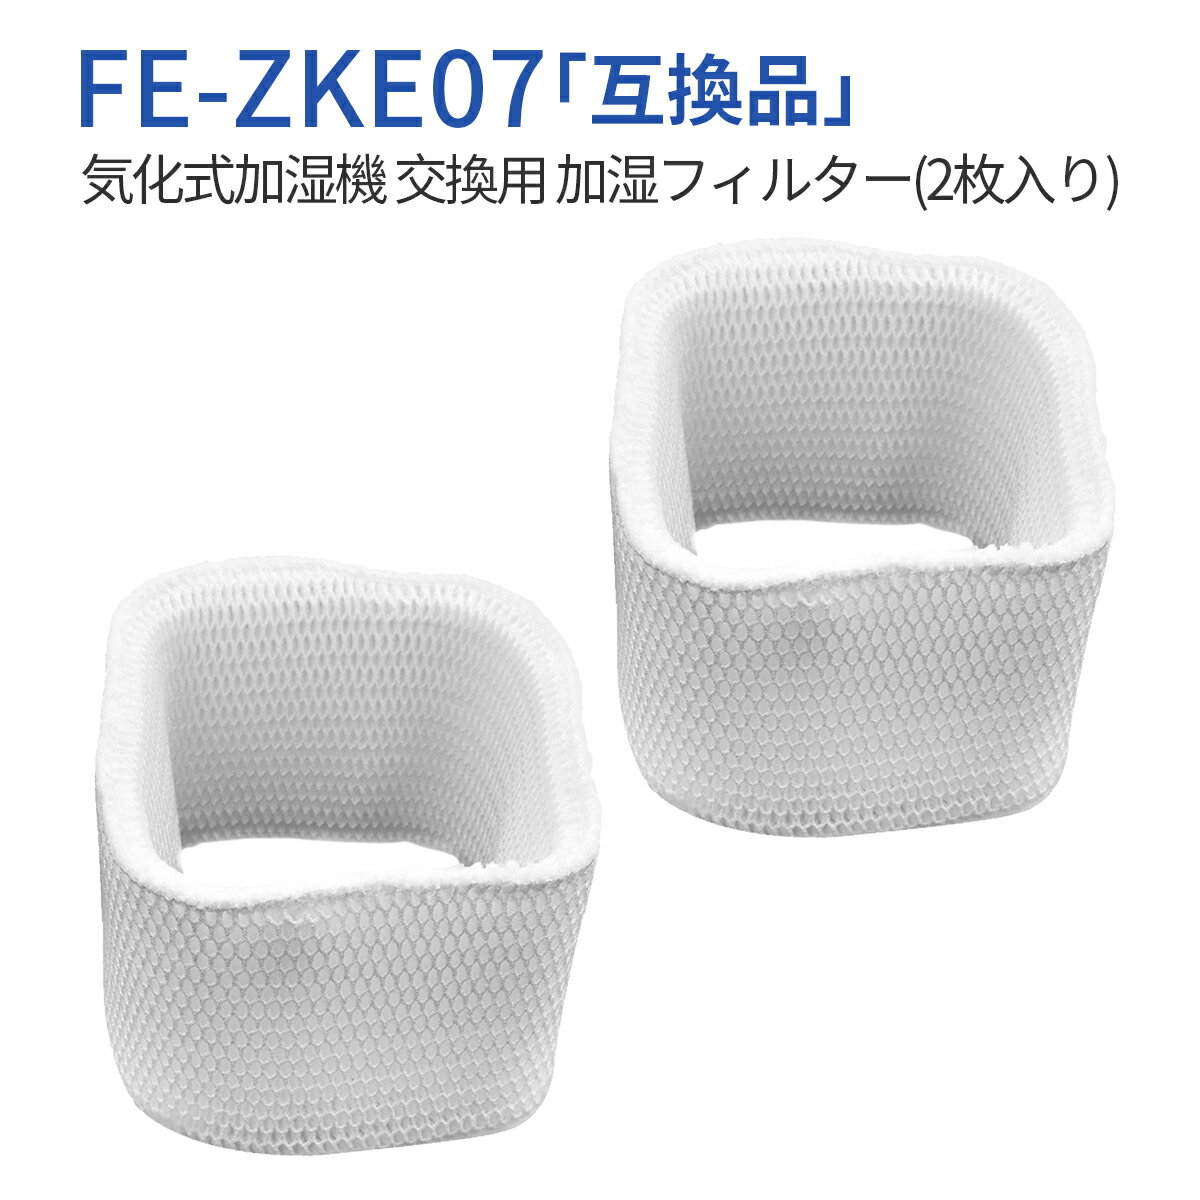 FE-ZKE07 加湿フィルター 加湿器 フィルター fe-zke07 パナソニック気化式加湿機用 交換フィルター（2枚入り）純正品ではなく互換品です